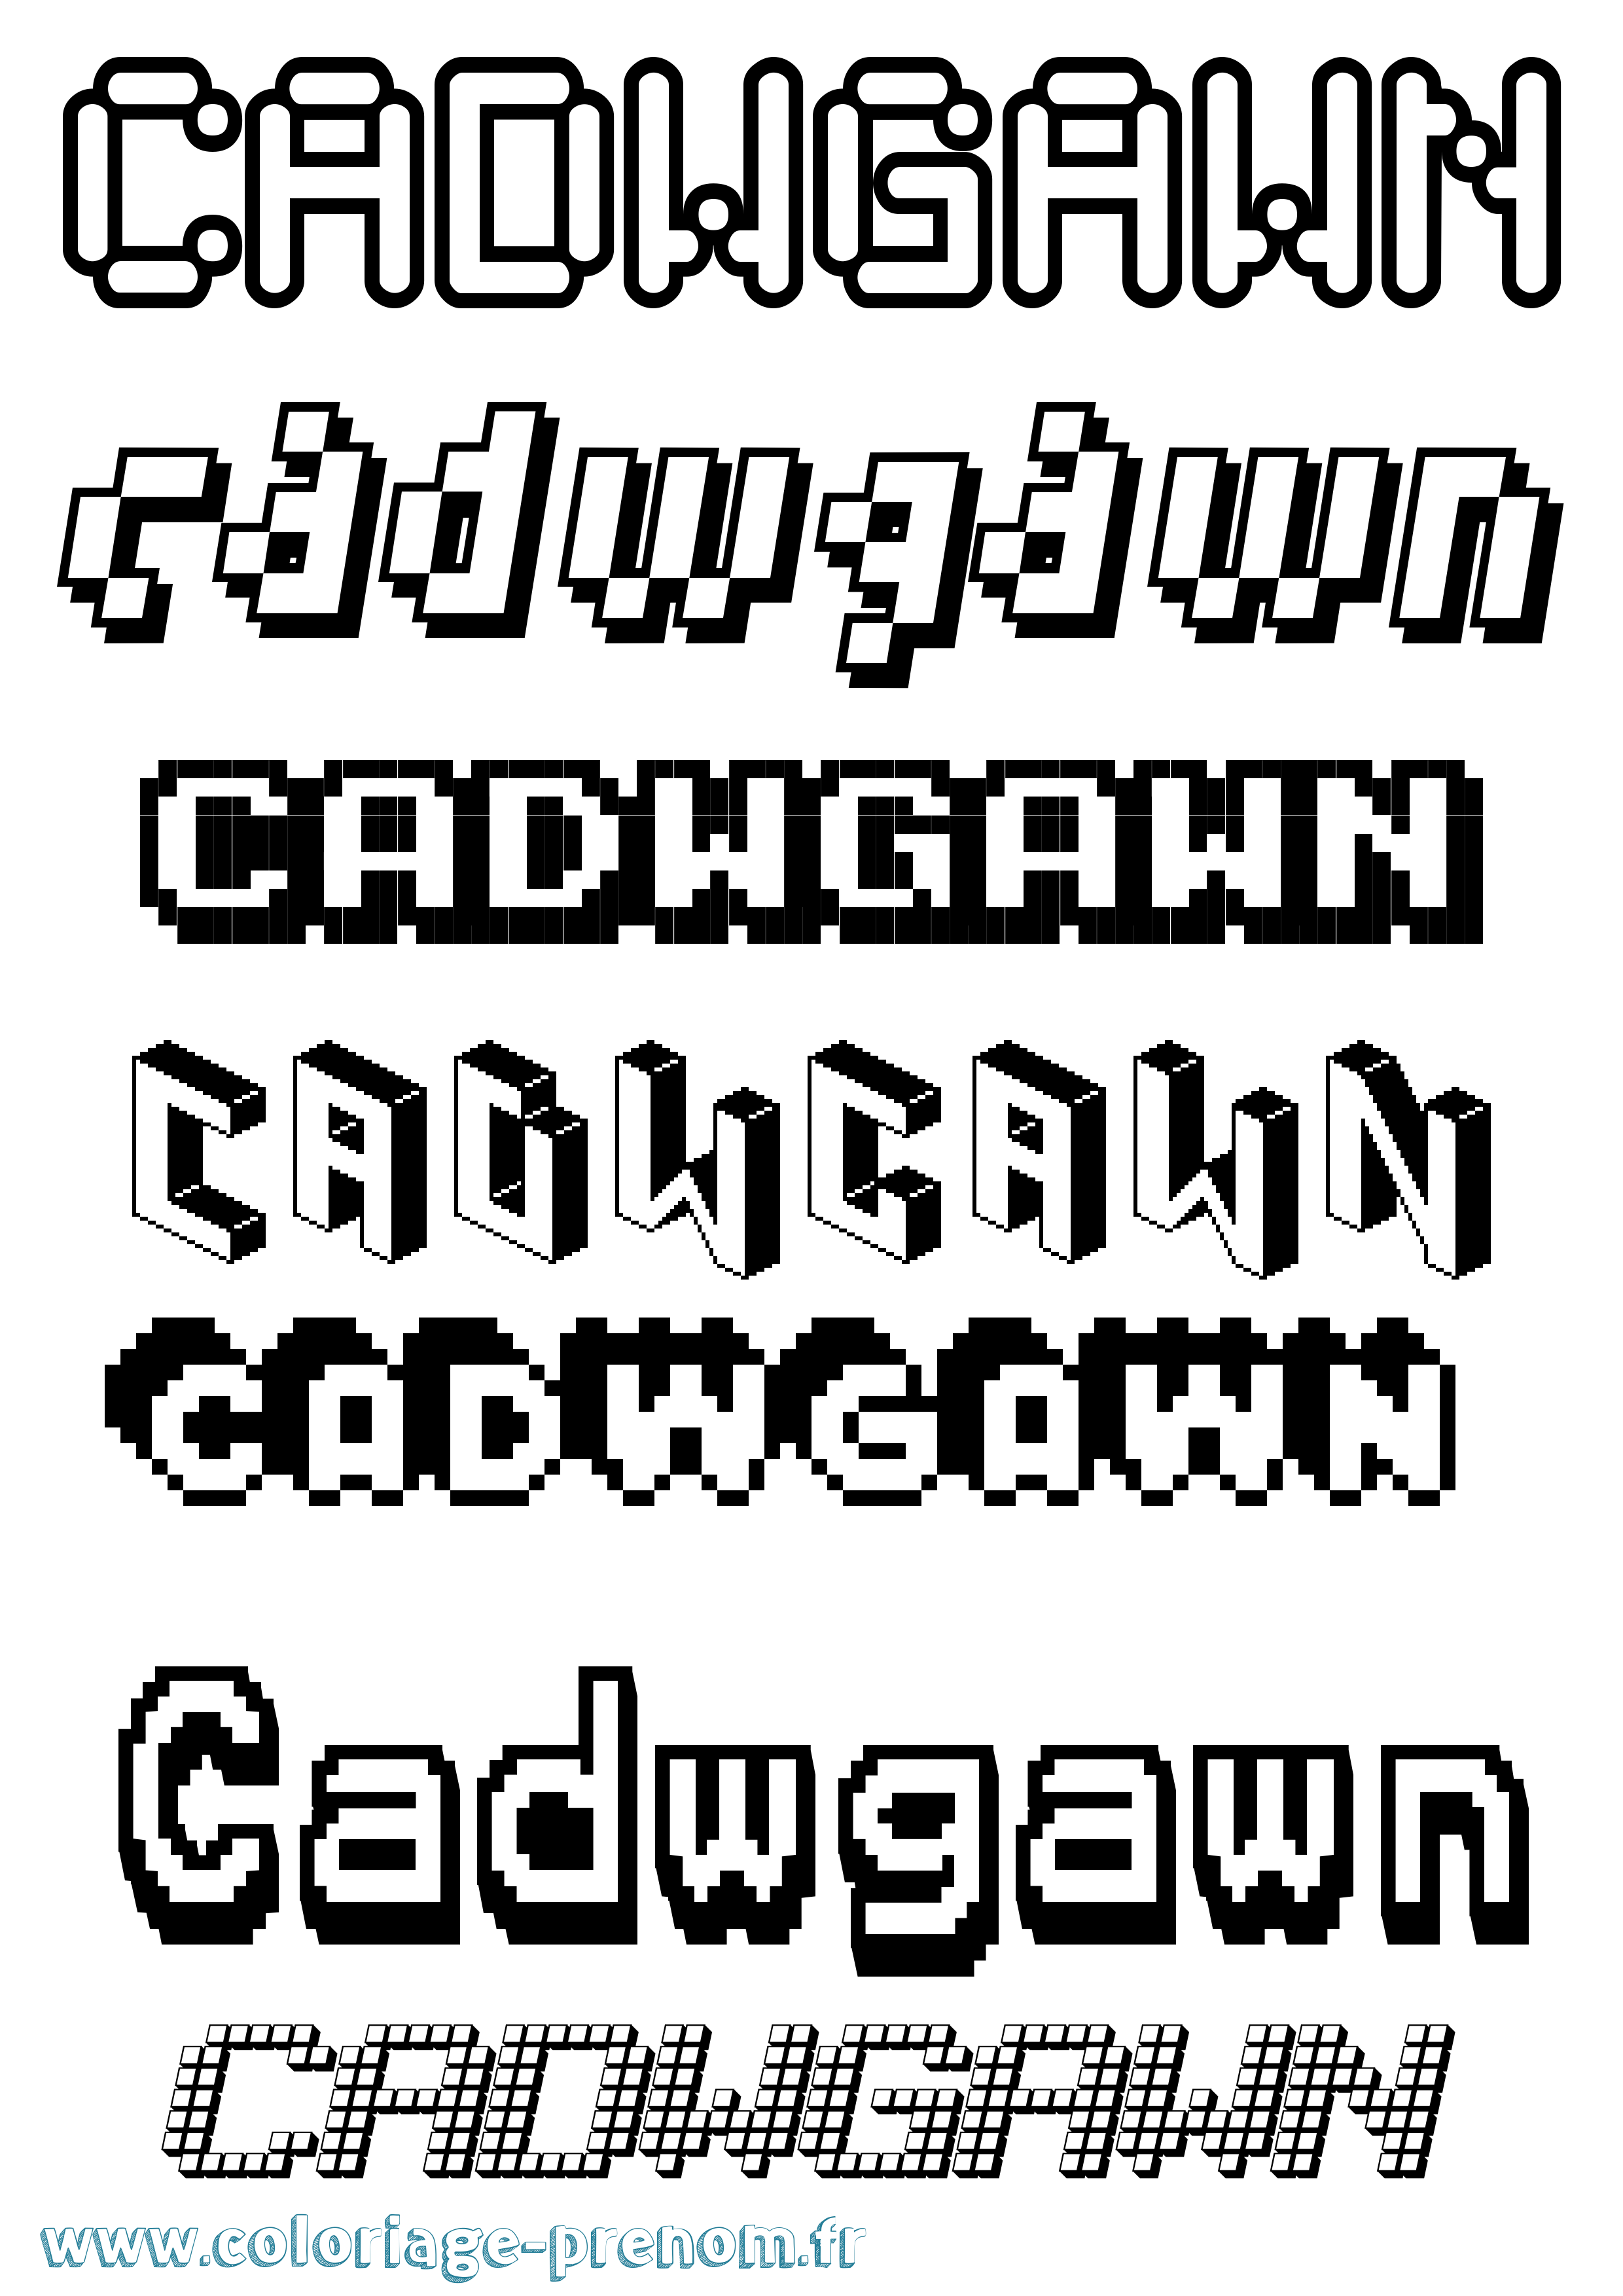 Coloriage prénom Cadwgawn Pixel